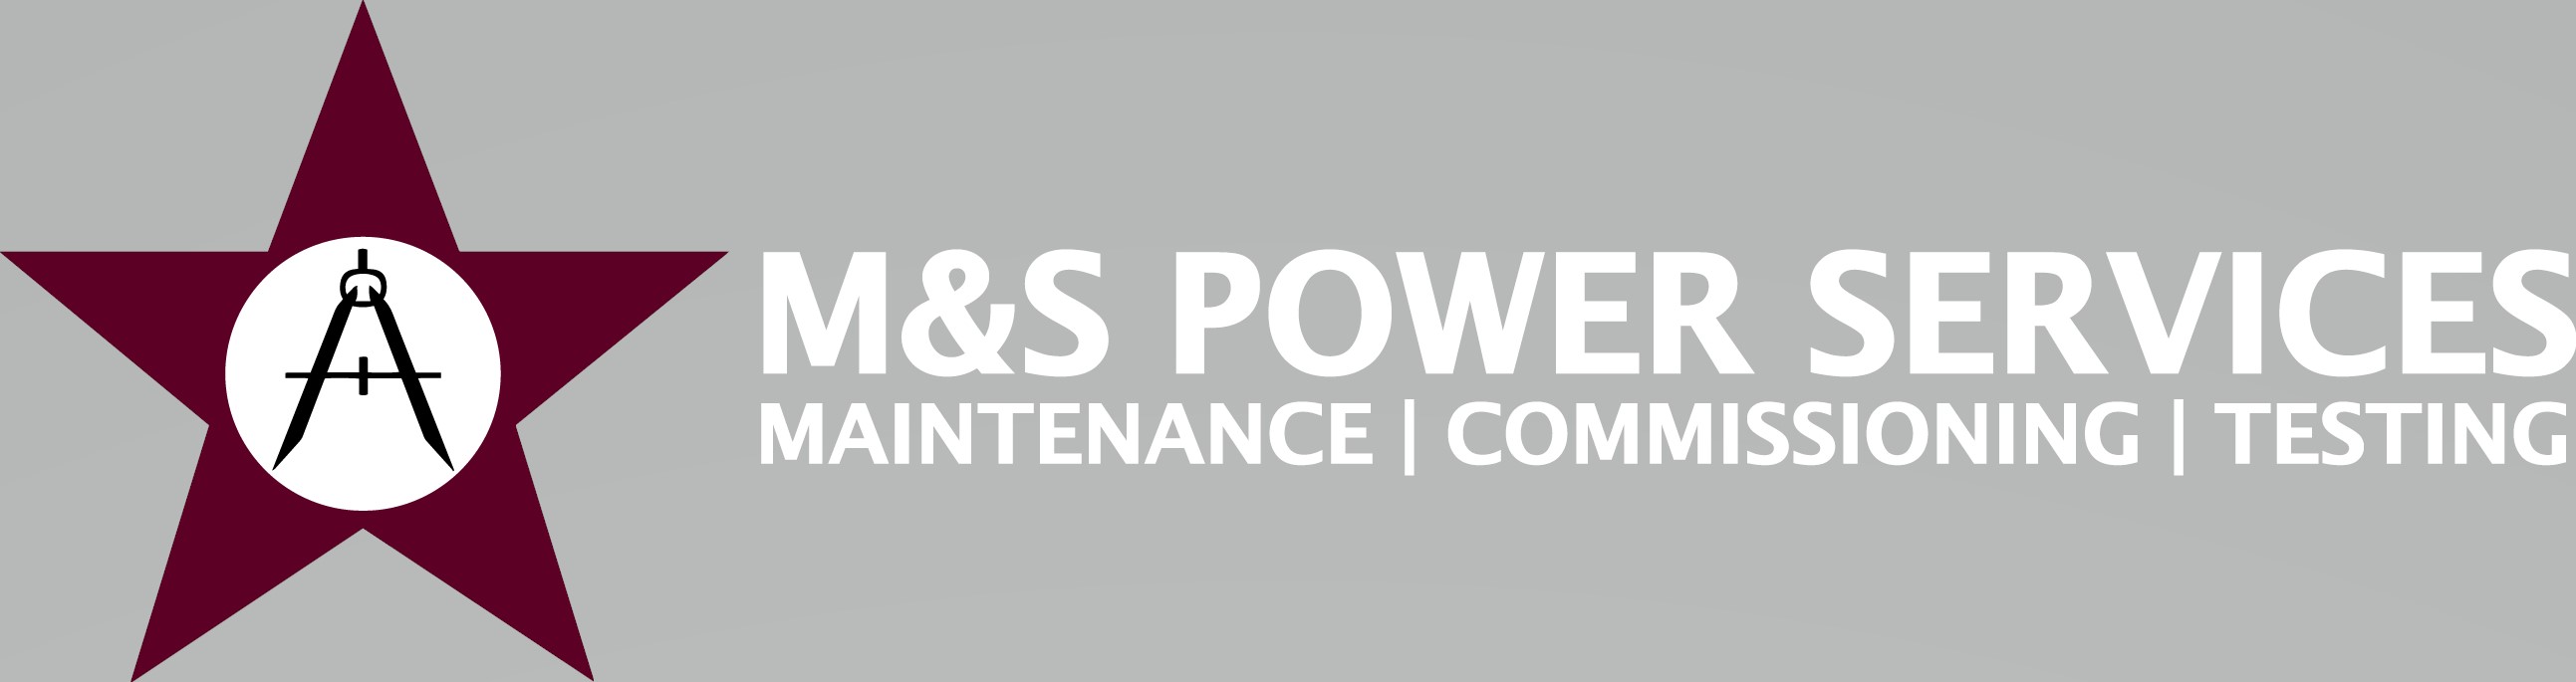 M&S Power Services